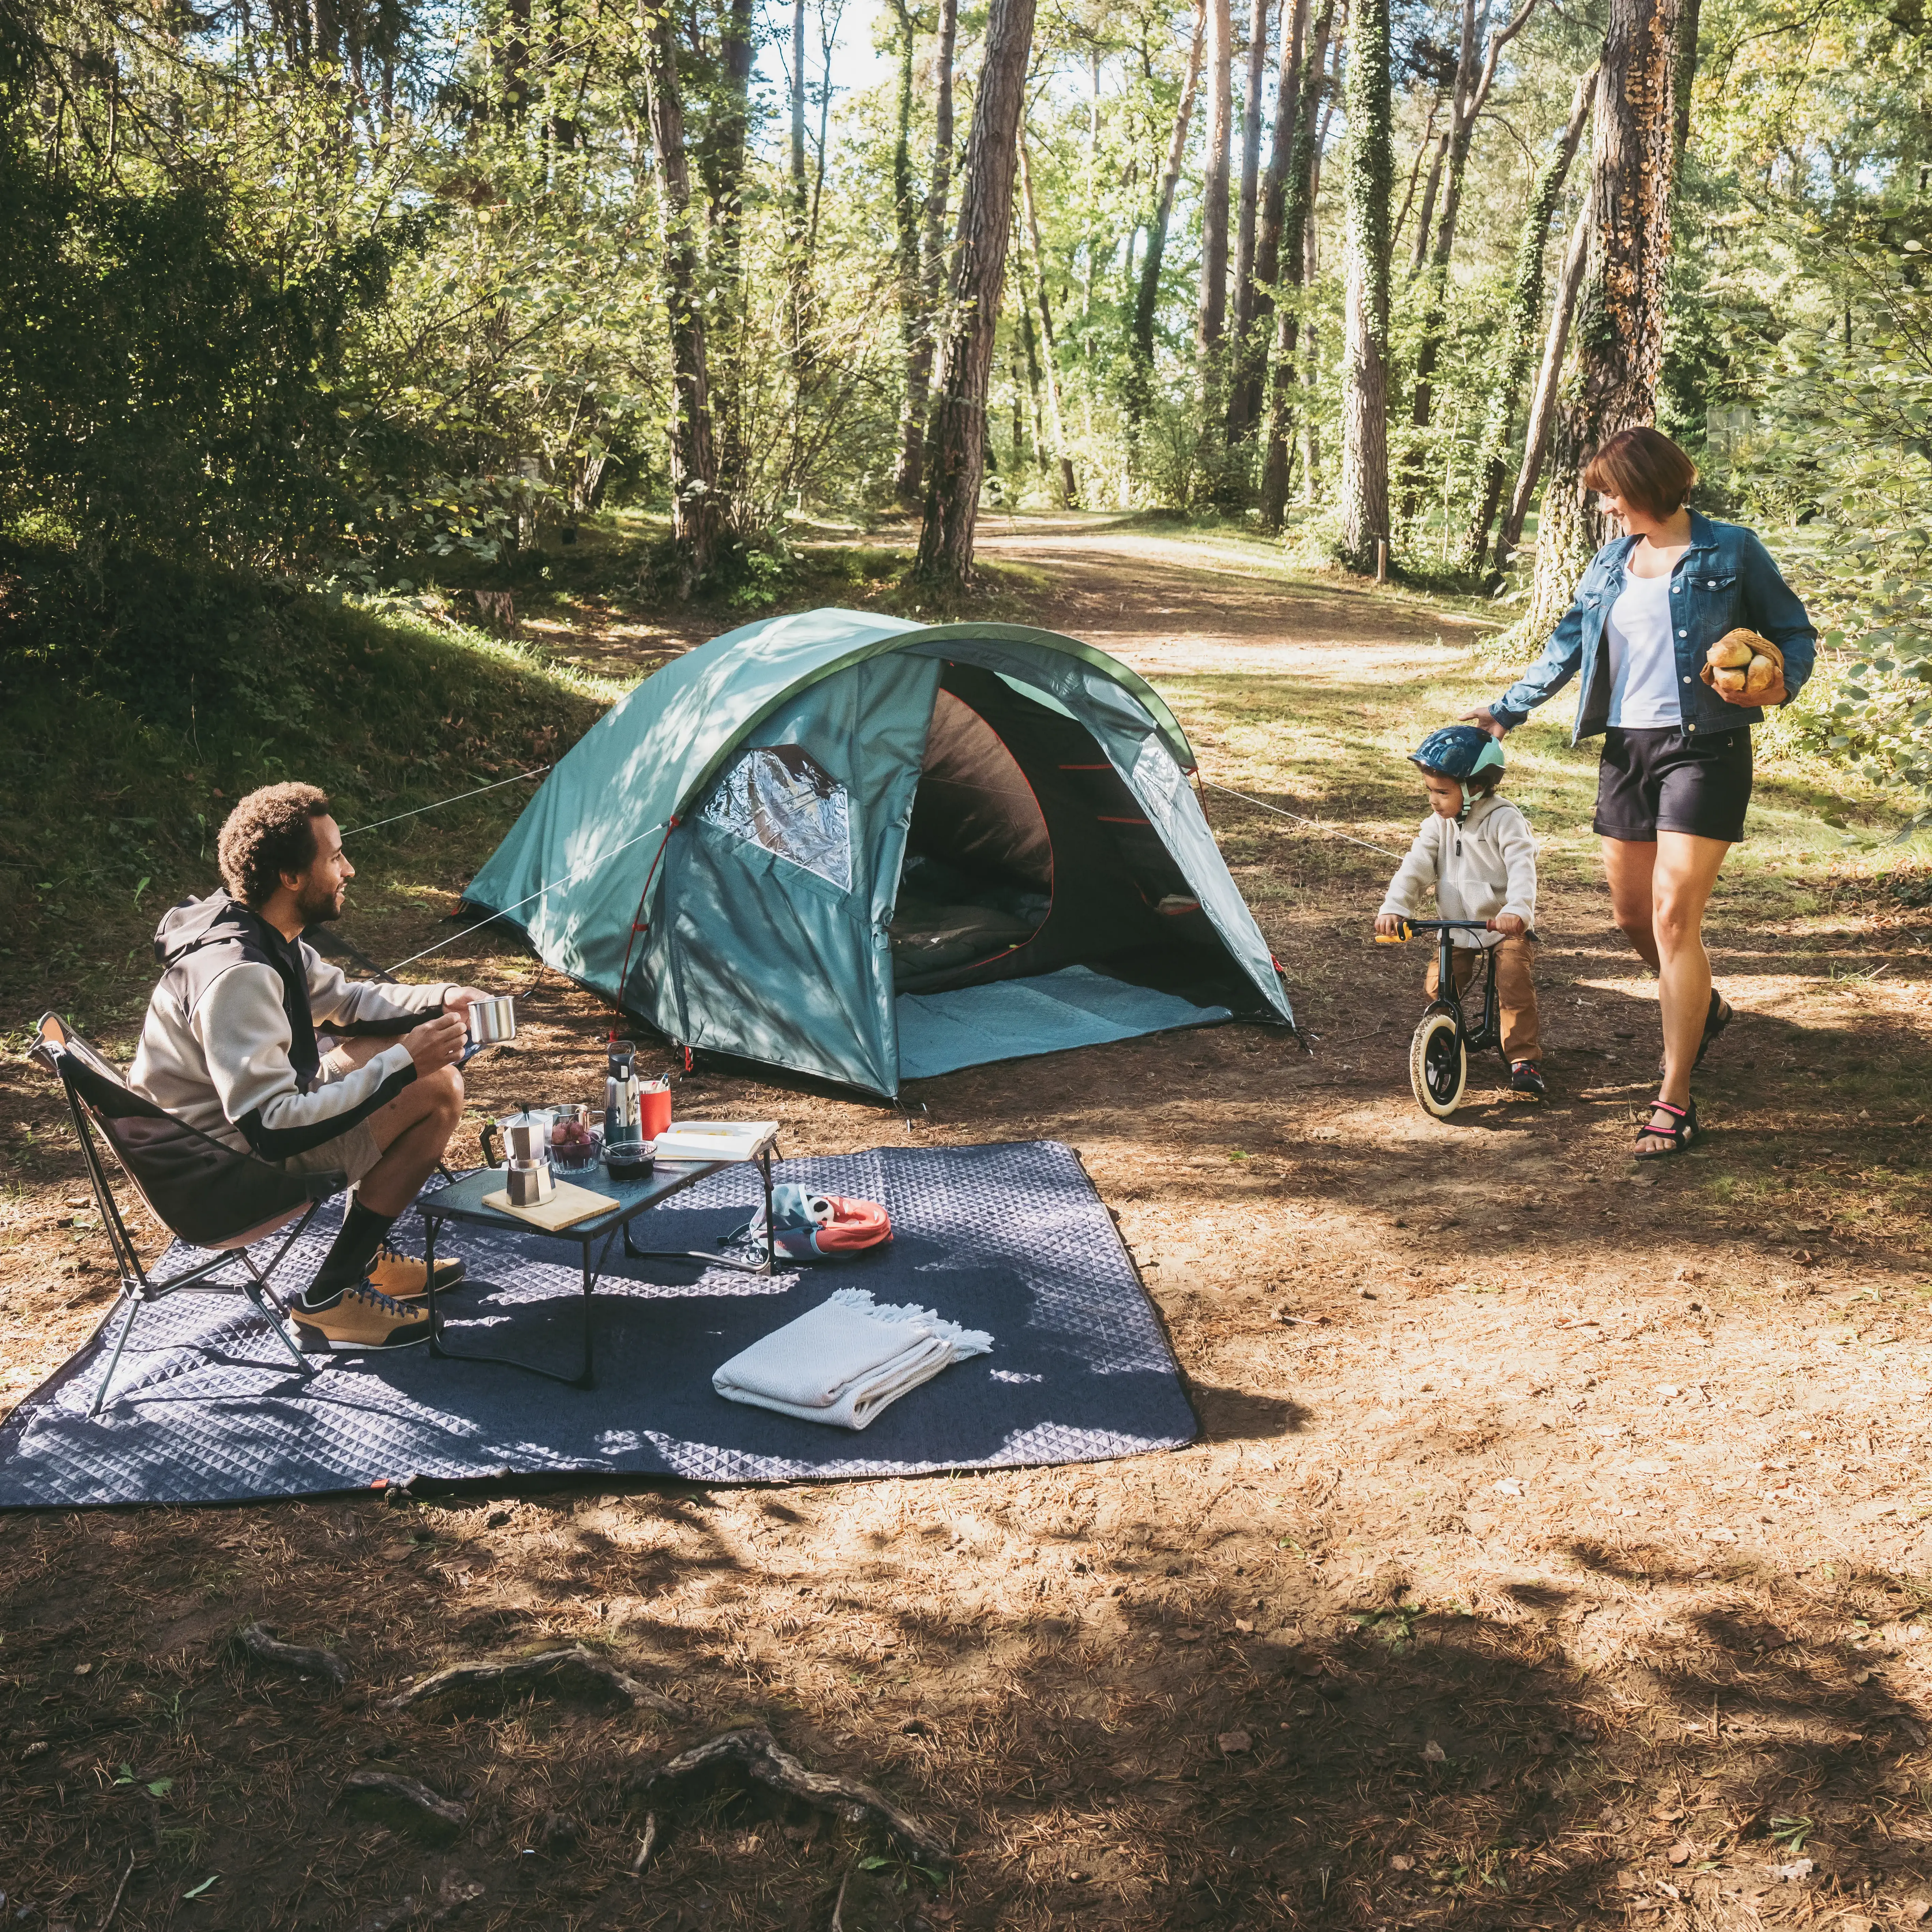 Accesorios de Camping